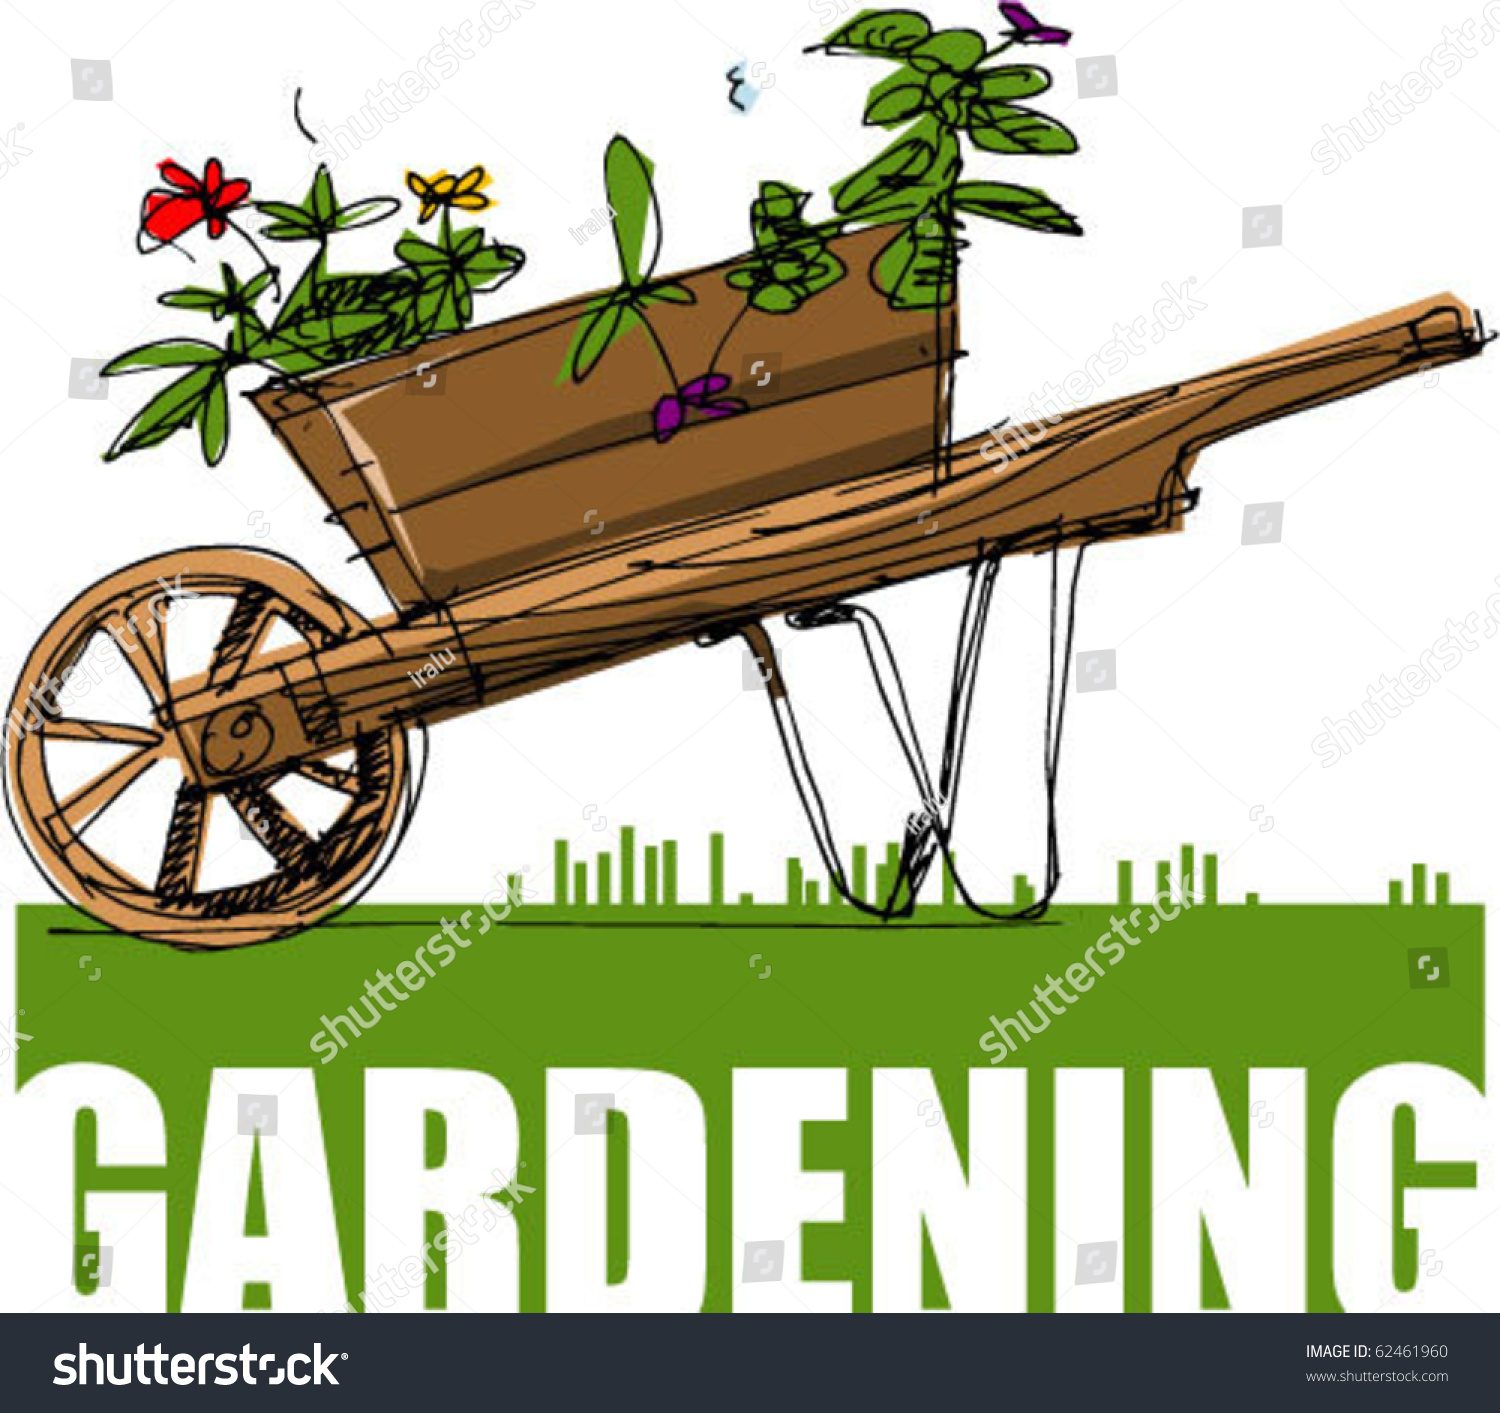 Garden Cart Handmade Sketch Based Vector Stock Vector Royalty Free Shutterstock